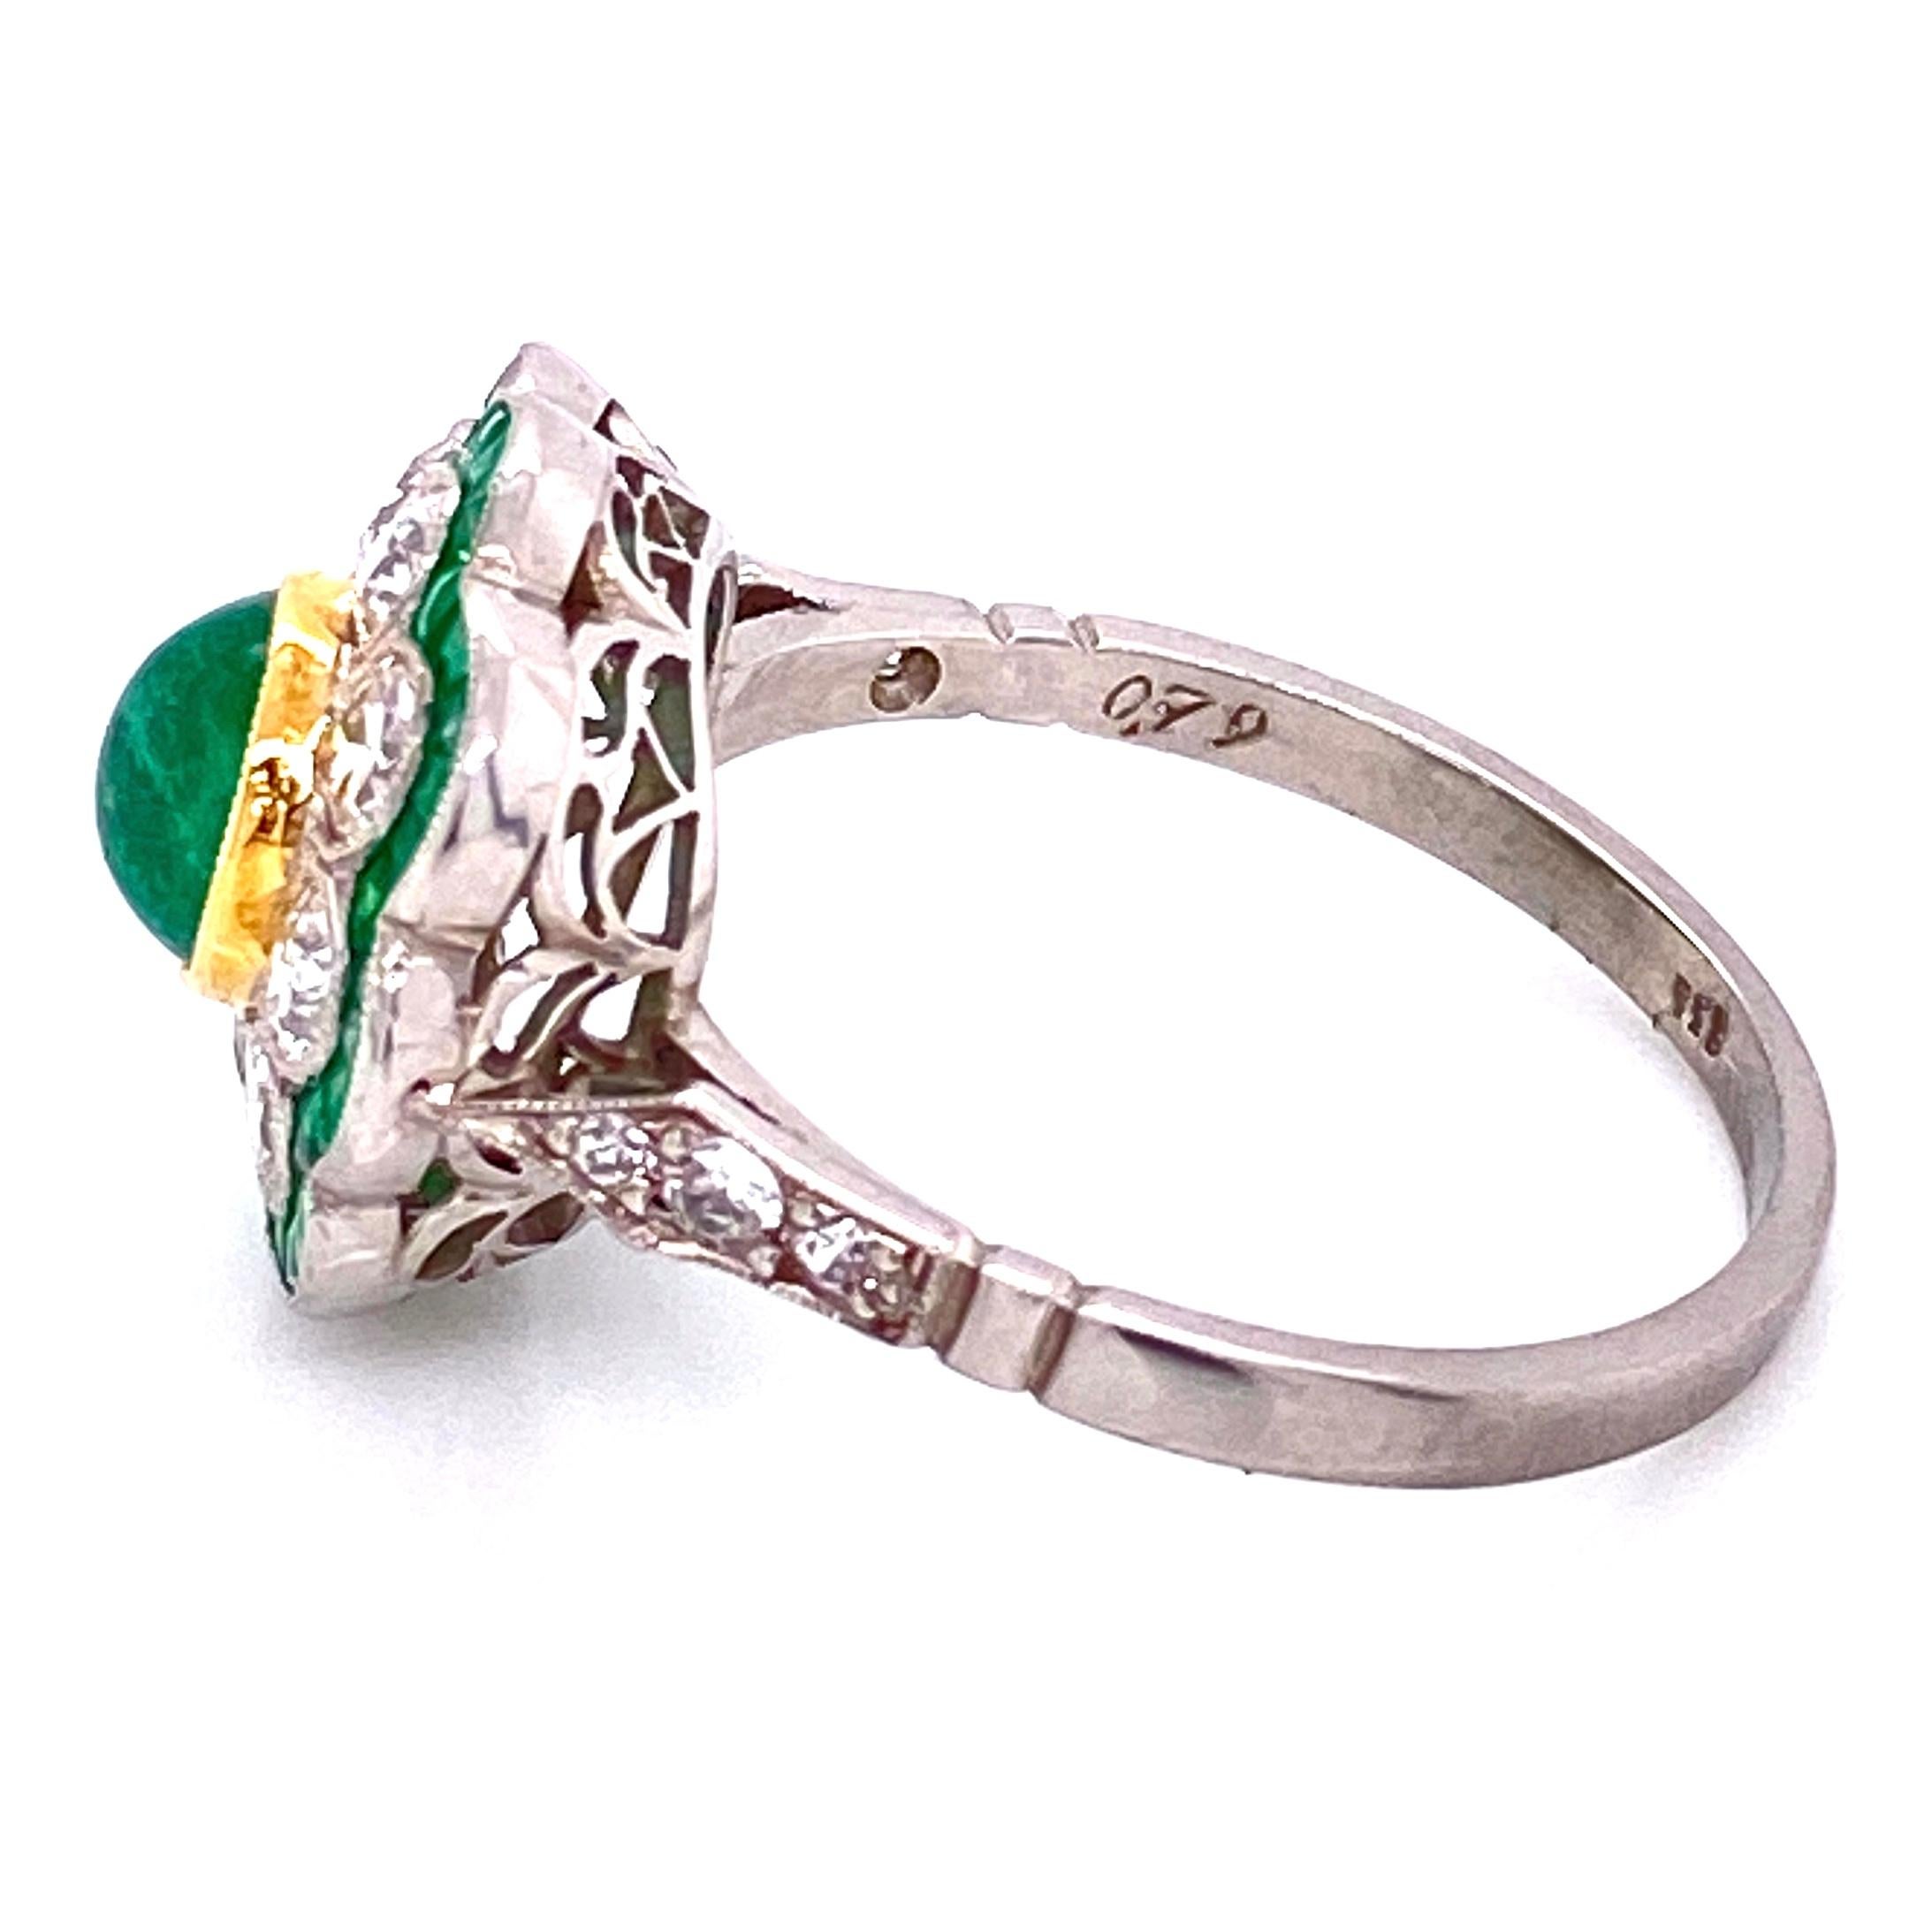 Women's Art Deco Revival Emerald and Diamond Platinum Ring Estate Fine Jewelry